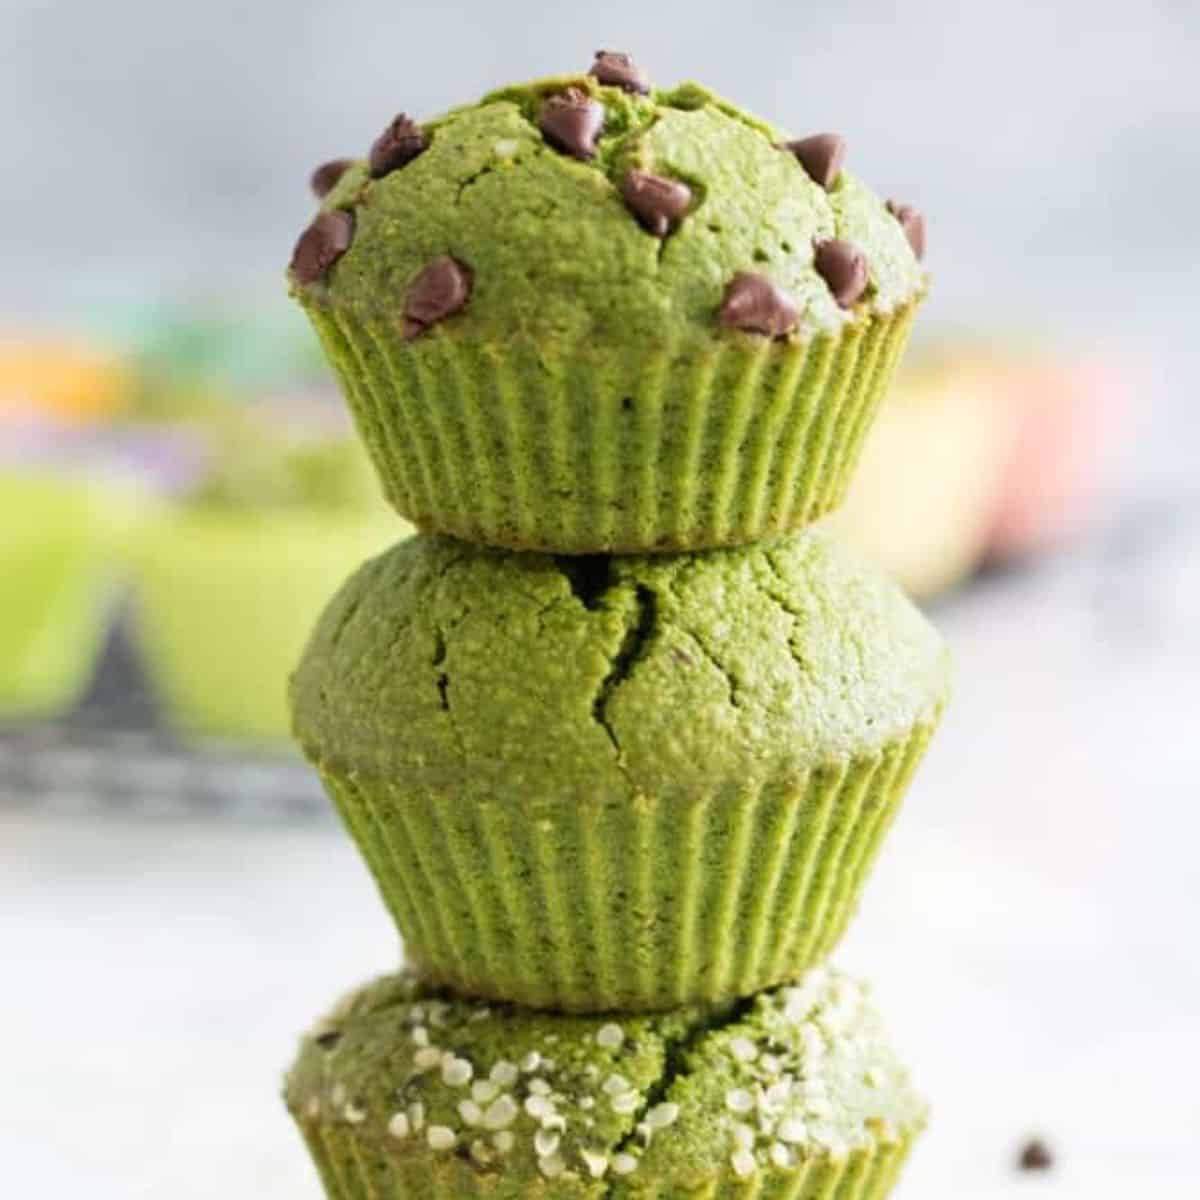 Green spinach muffins.